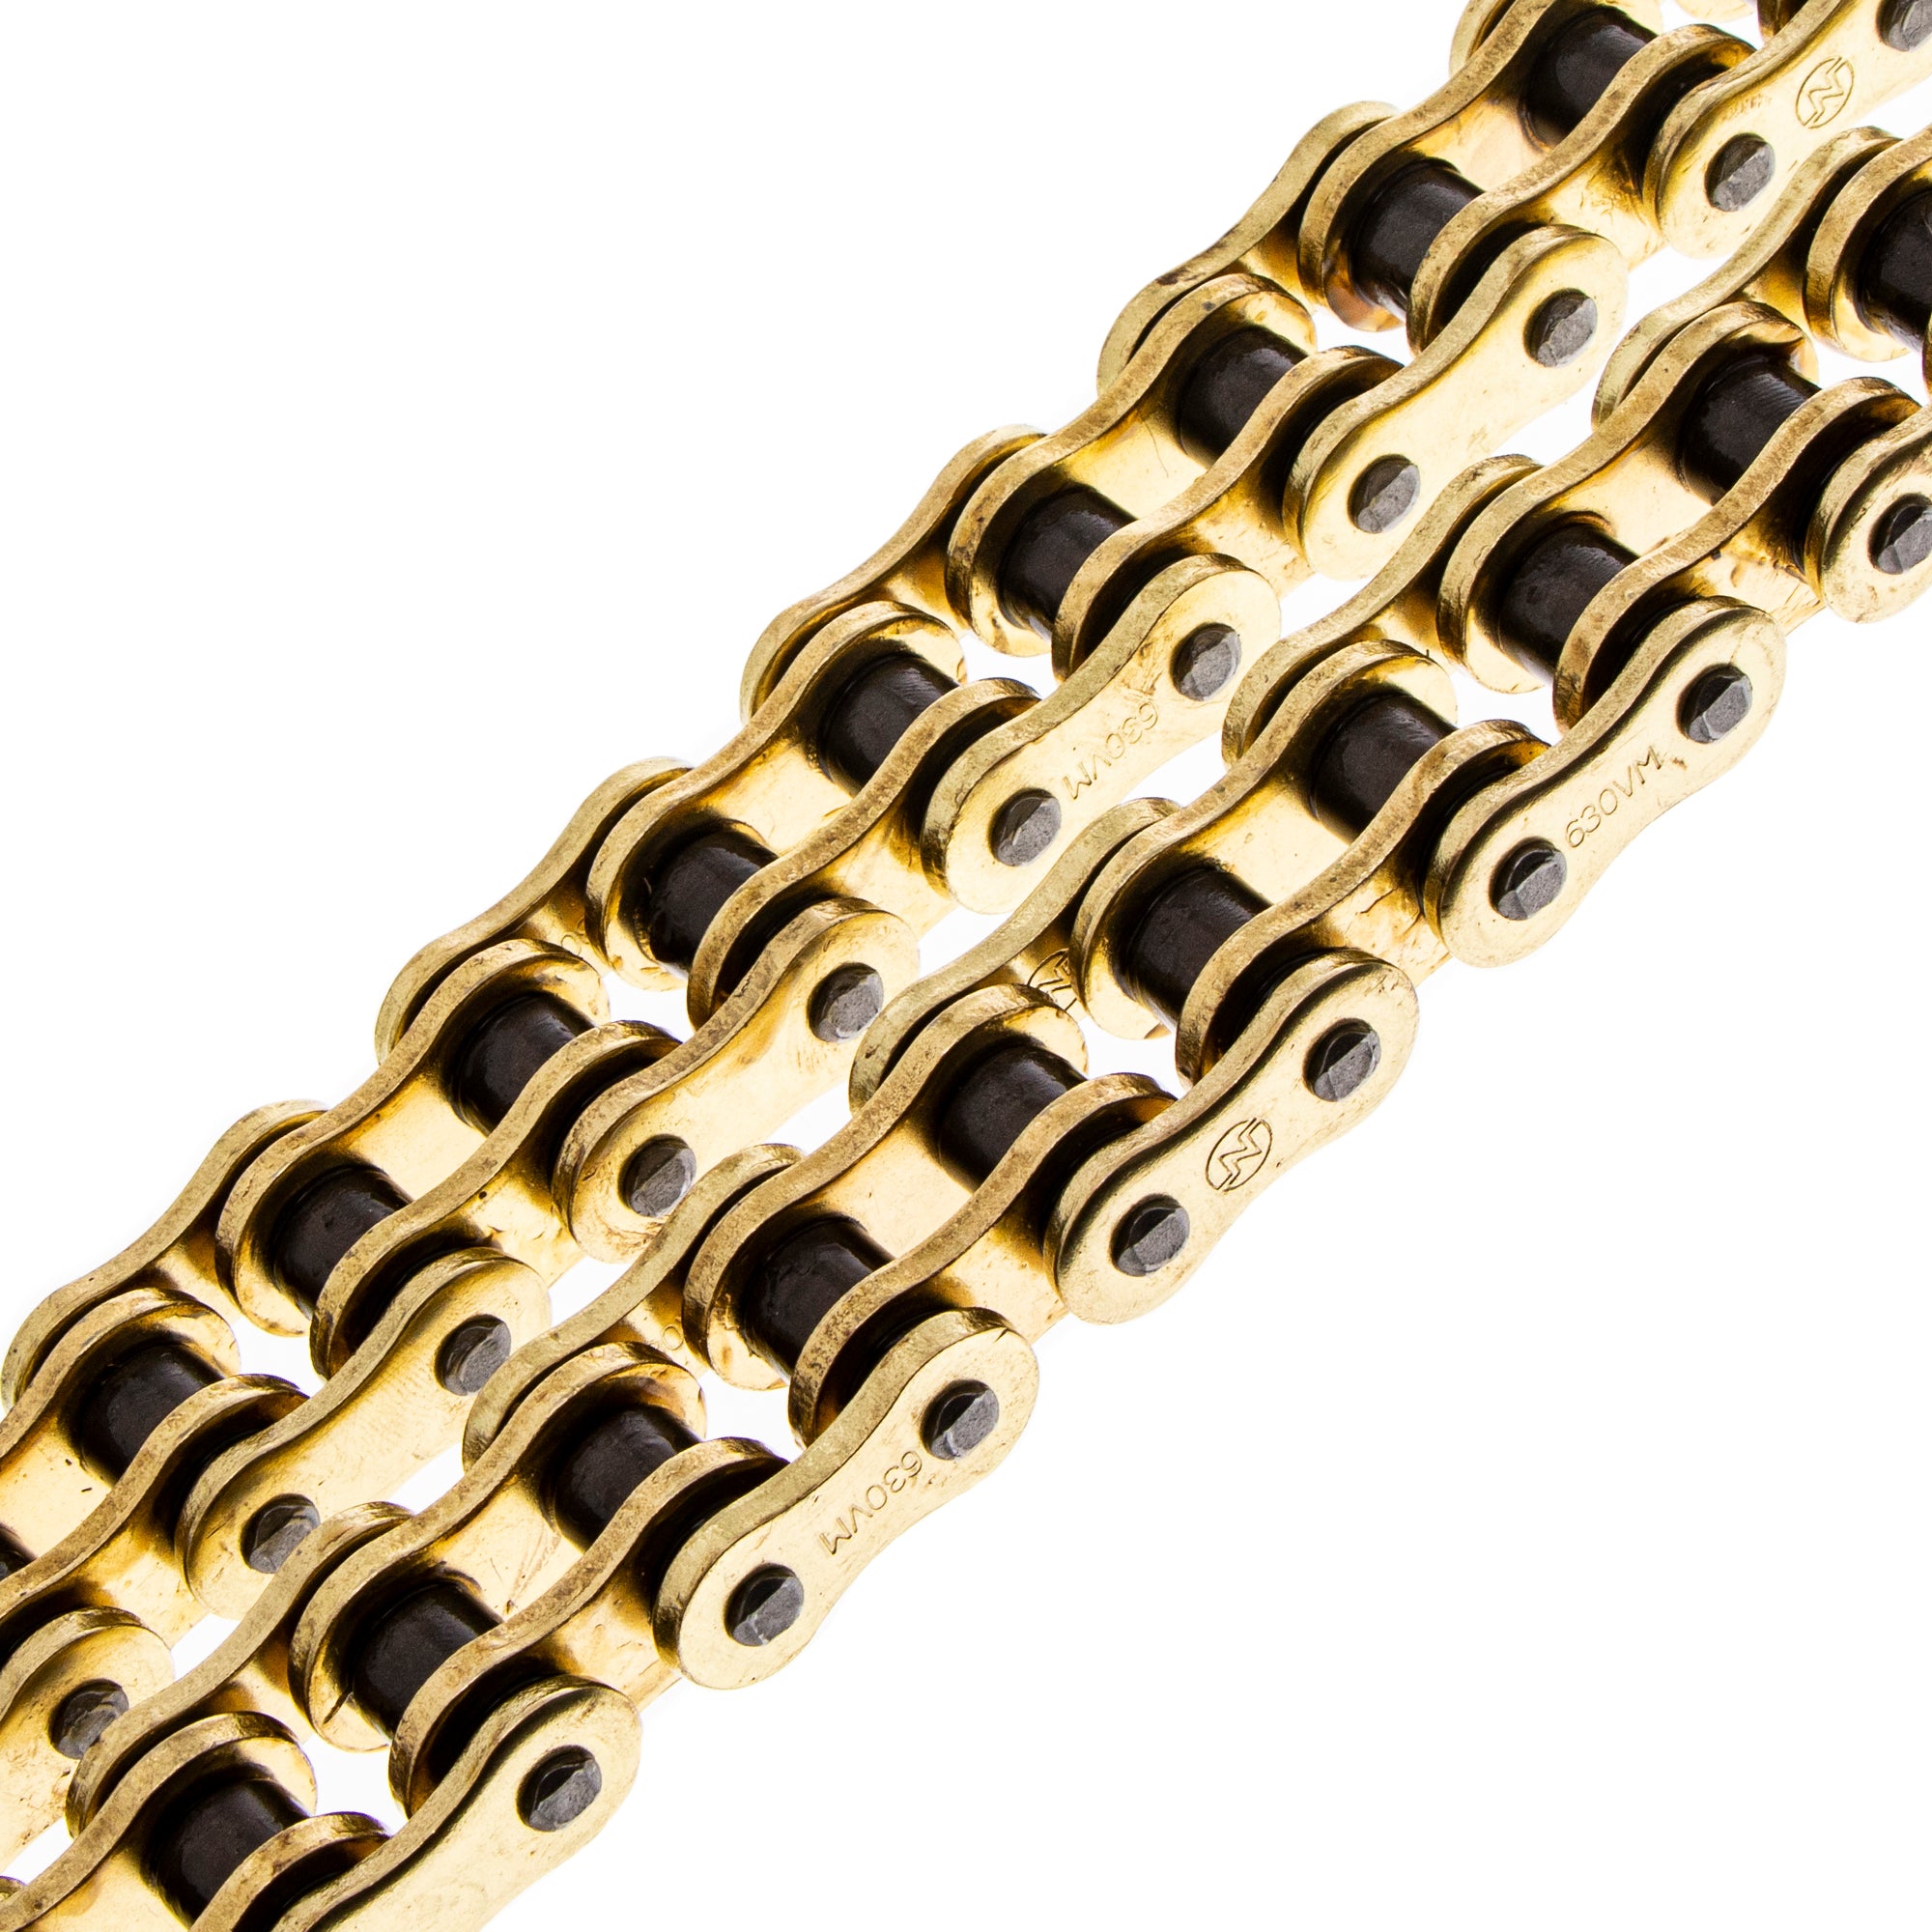 Gold X-Ring Chain 94 w/ Master Link for zOTHER KZ1000C GPz750 5483 NICHE 519-CDC2594H